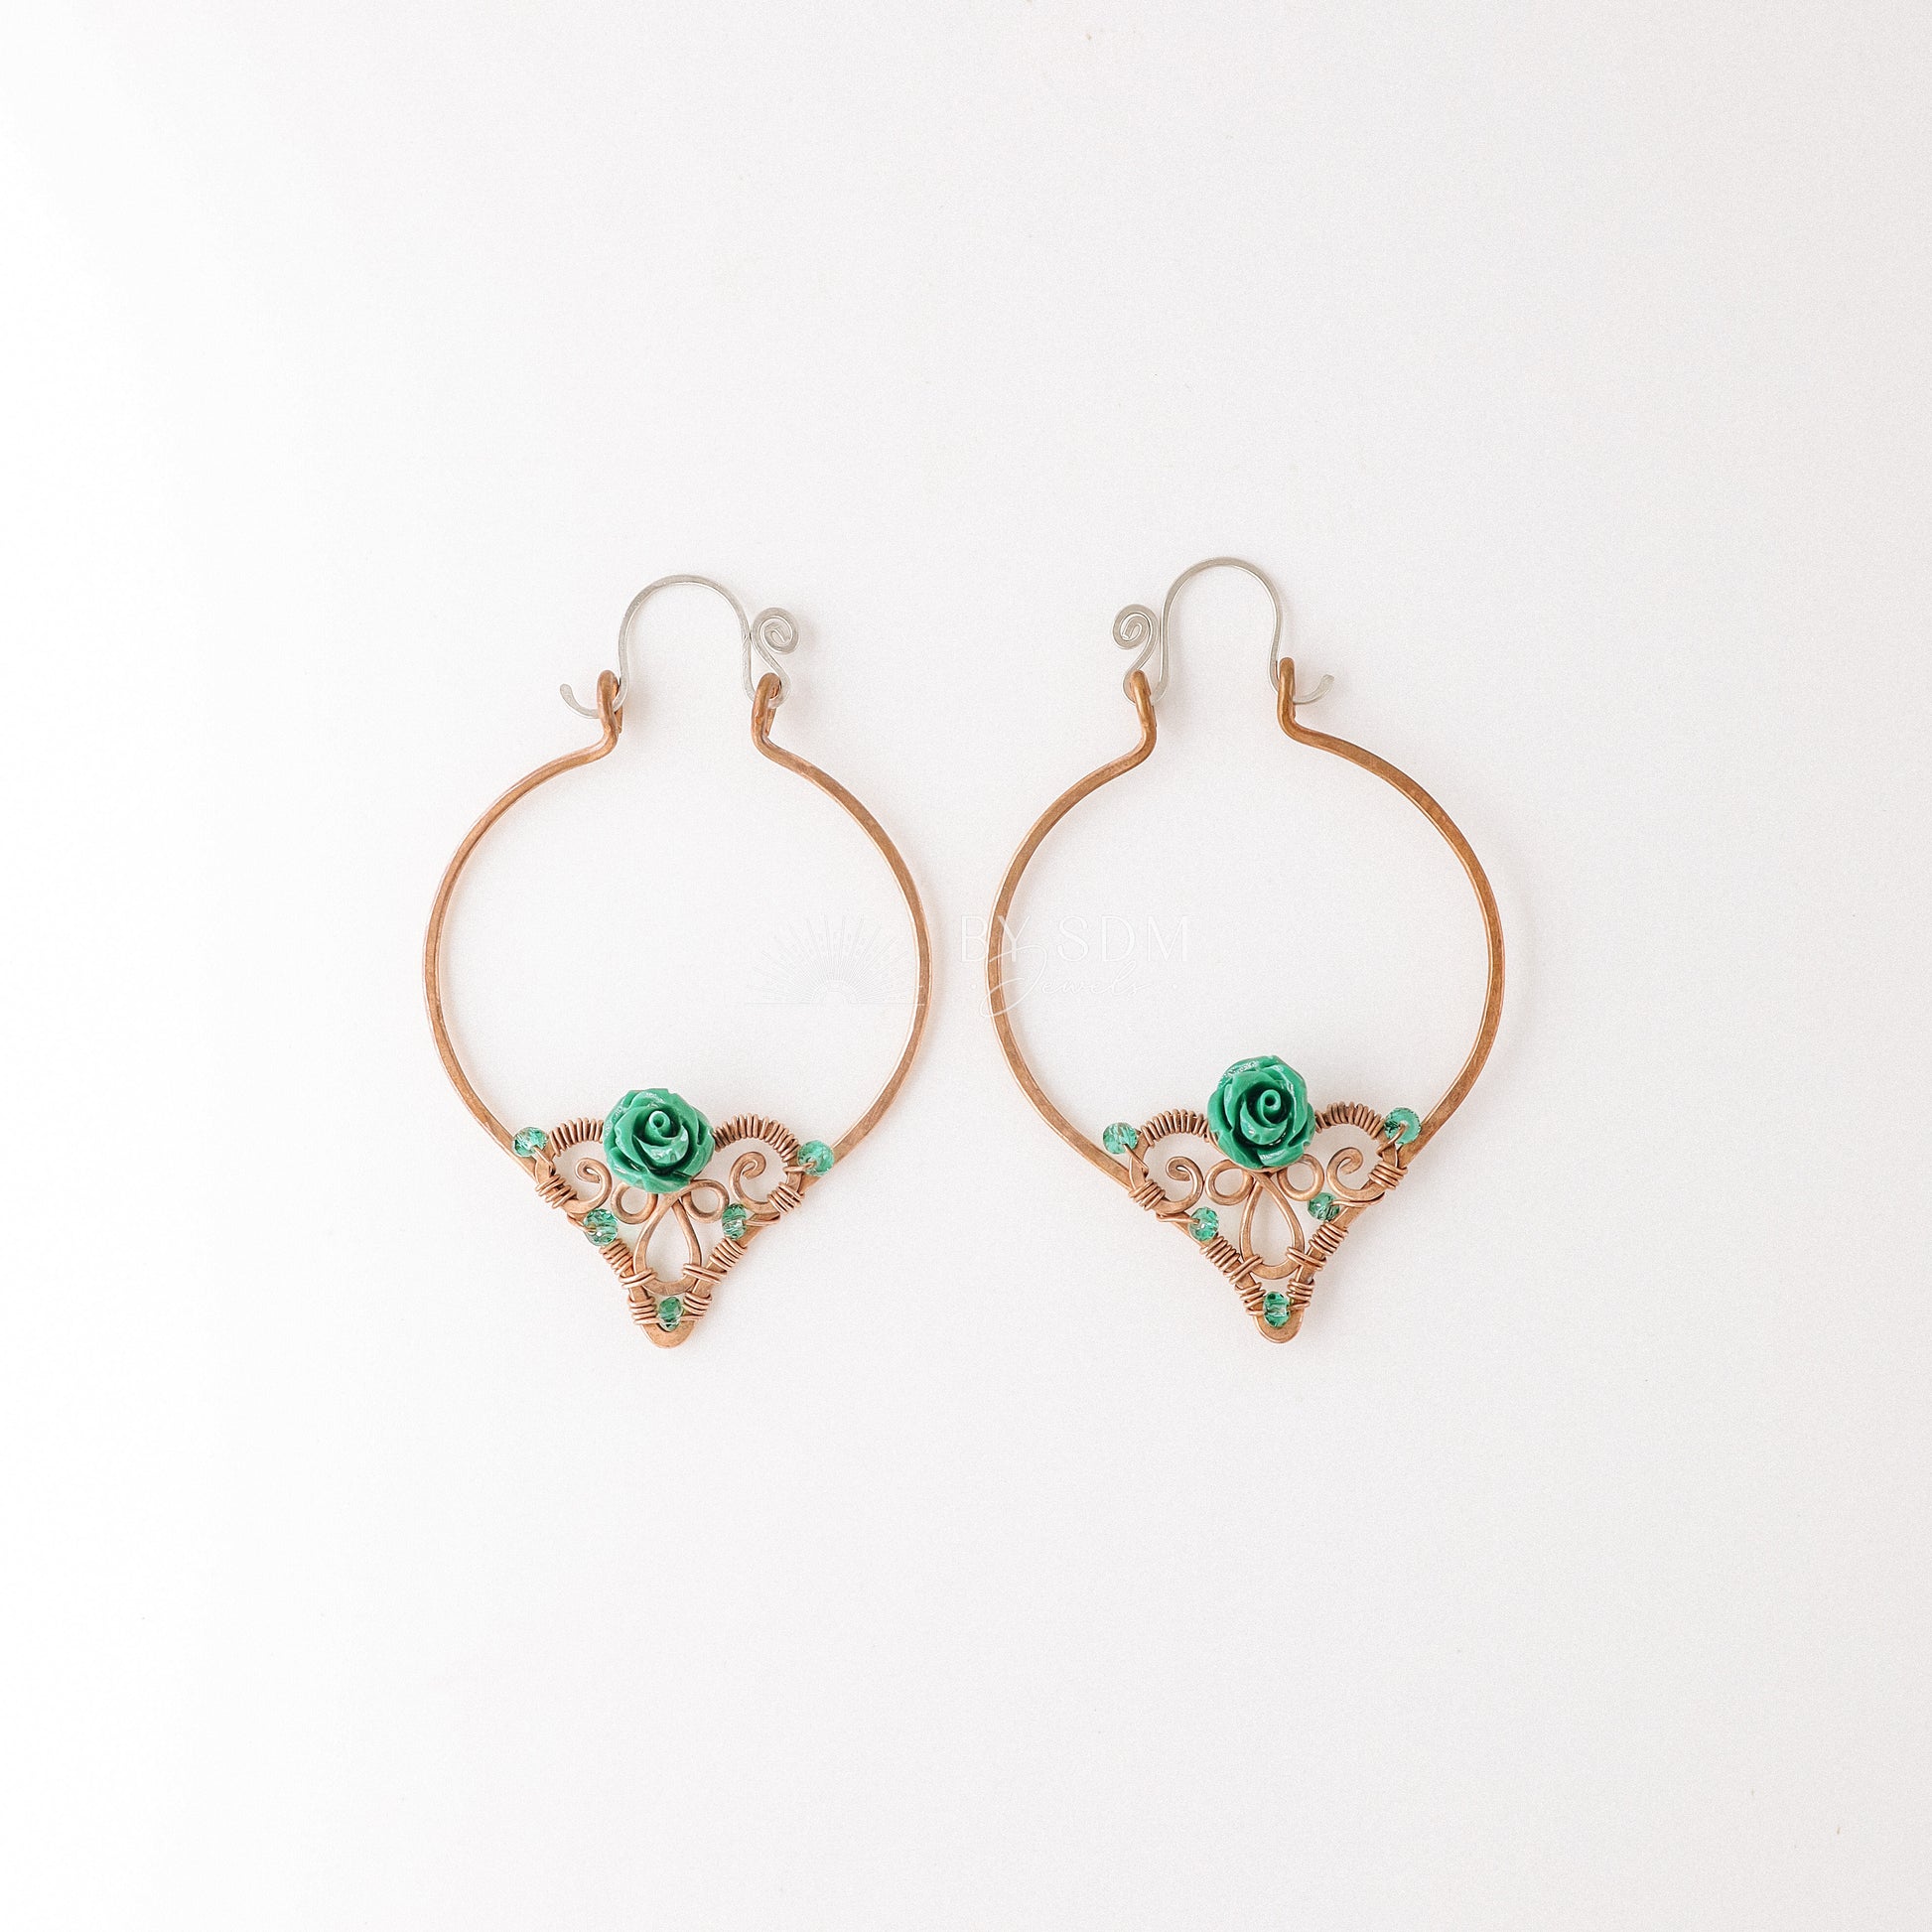 Emerald Hoop Earrings • Green Hoops • May Birthstone • Copper Hoop Earrings • Emerald Jewelry • BYSDMJEWELS